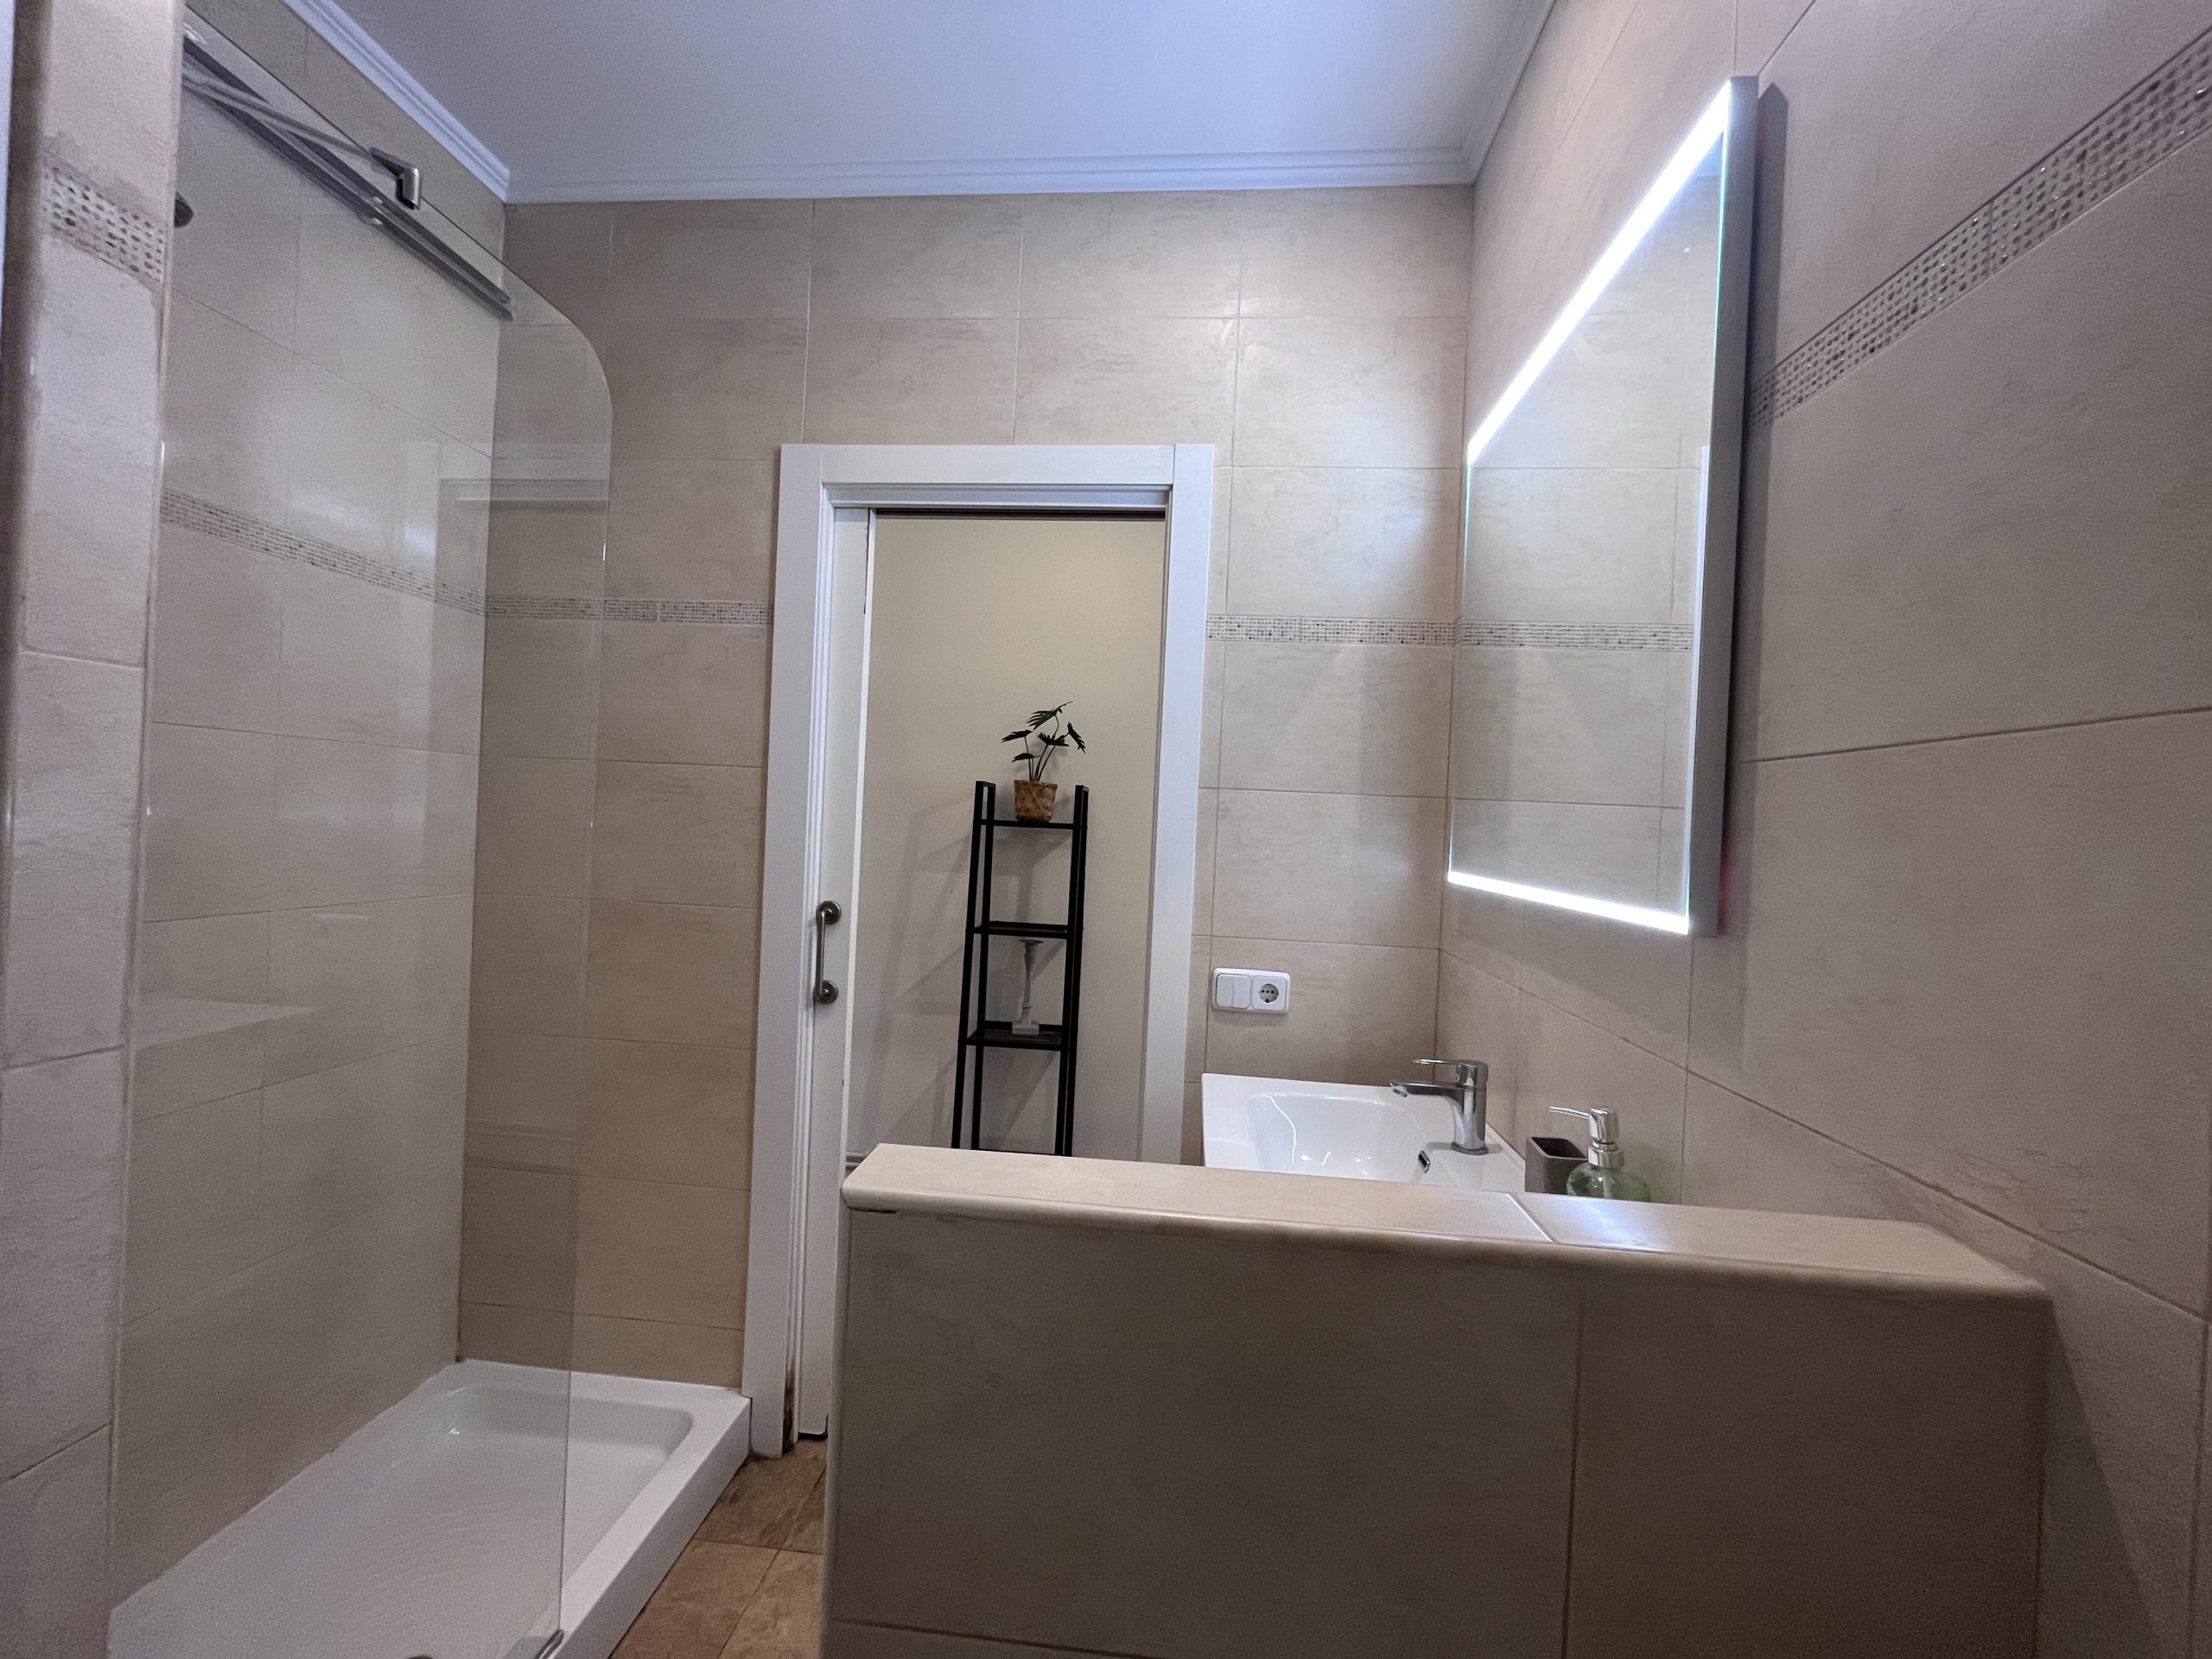 Apartment for rent in valencia - bathroom